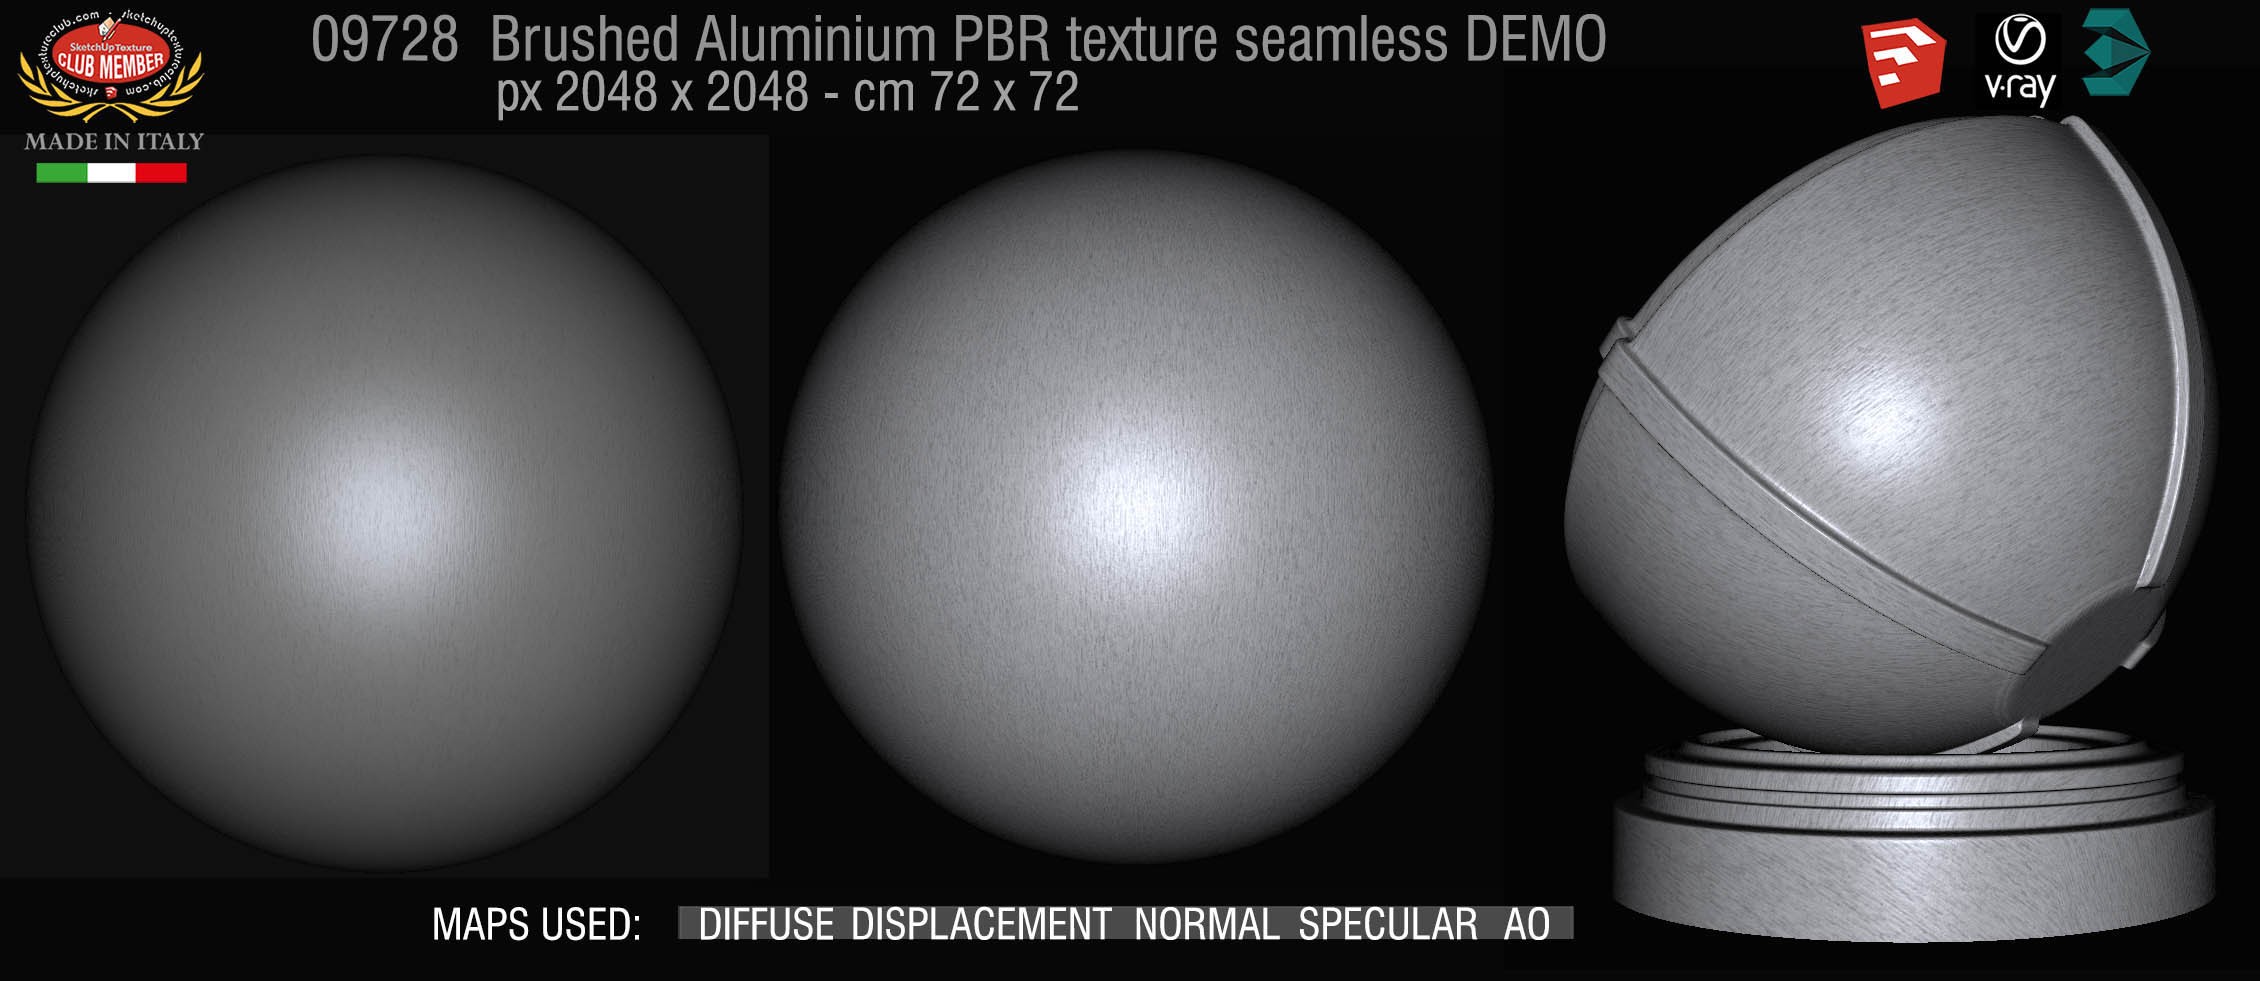 09728 Brushed aluminium PBR texture seamless DEMO